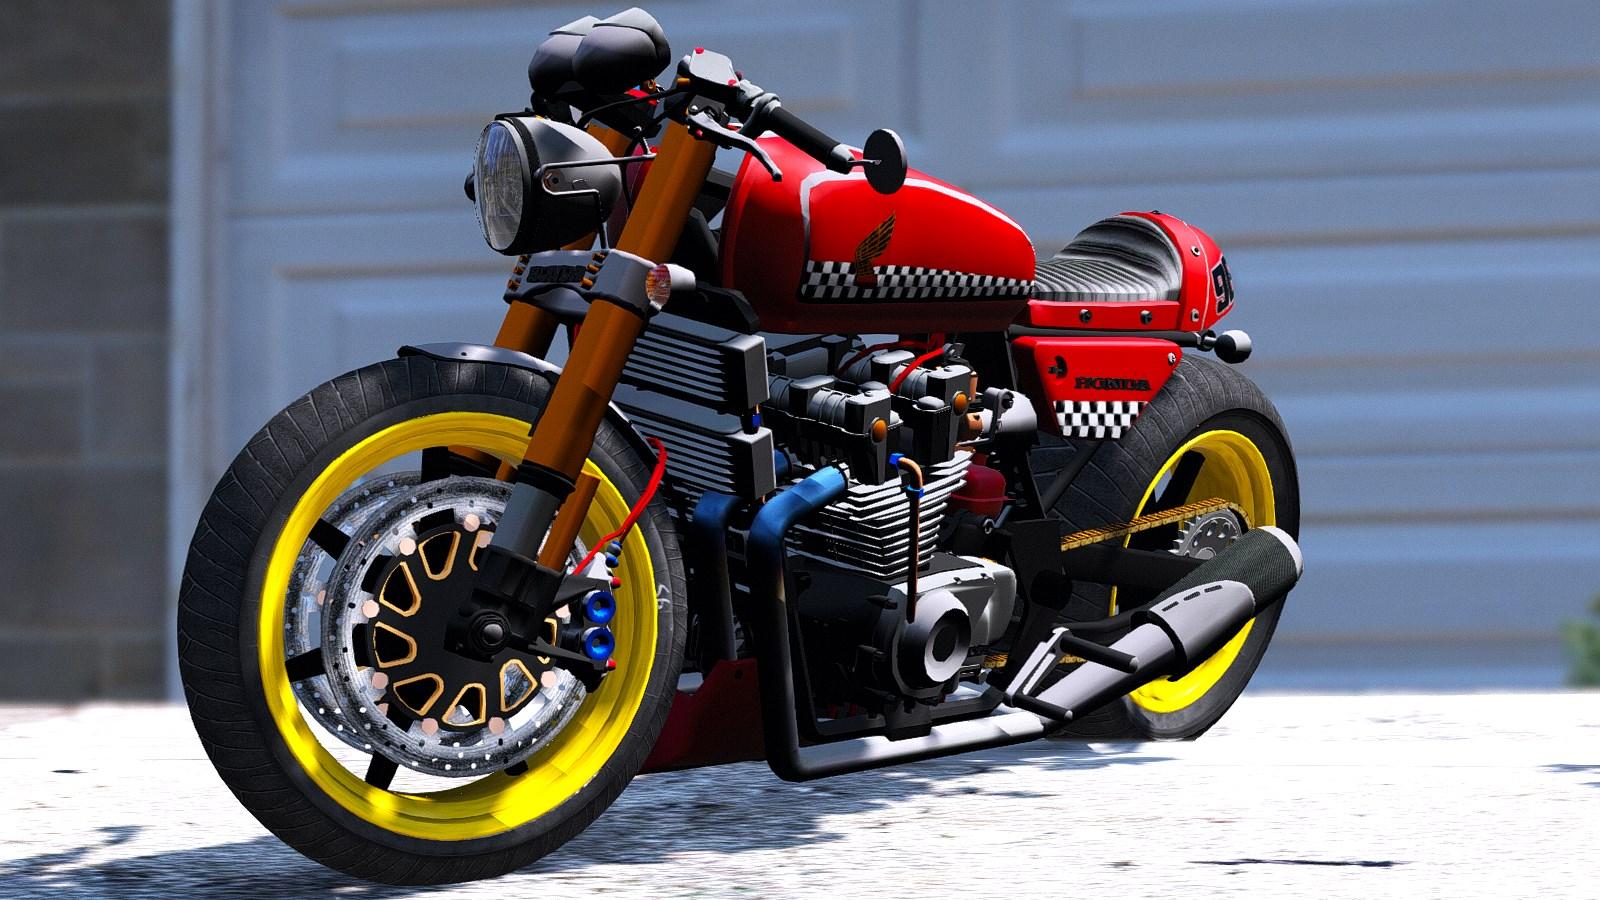 Honda CB750 Cafe Racer by Rewheeled  BikeBrewerscom